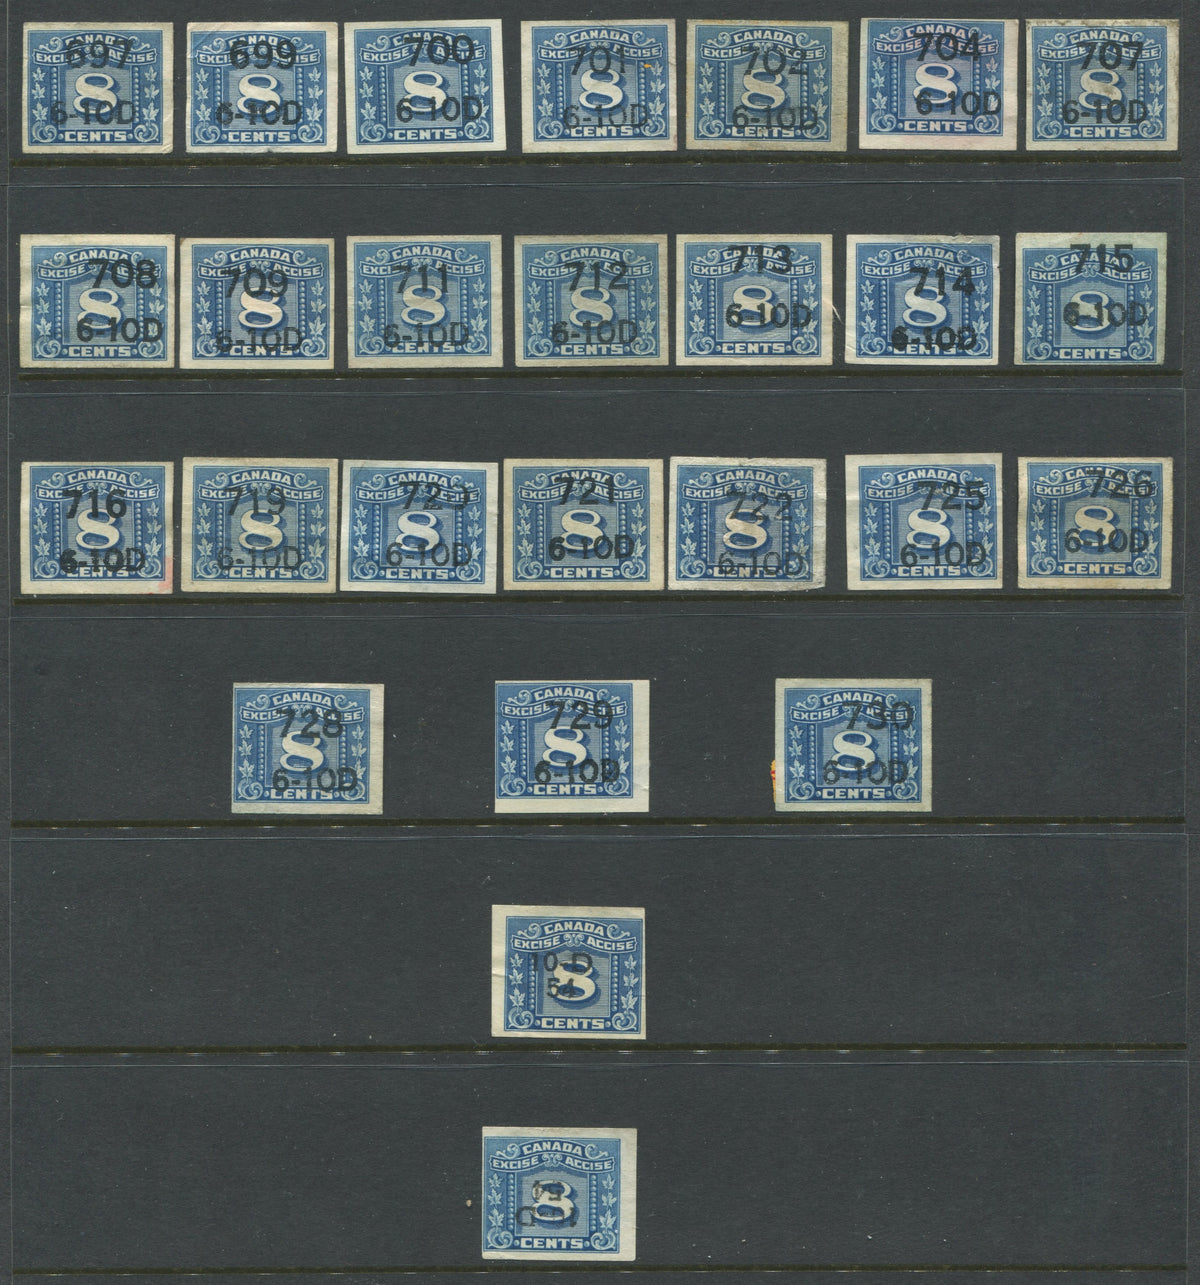 0101FX1904 - Canada Excise Stamp Precancel Collection - FX101